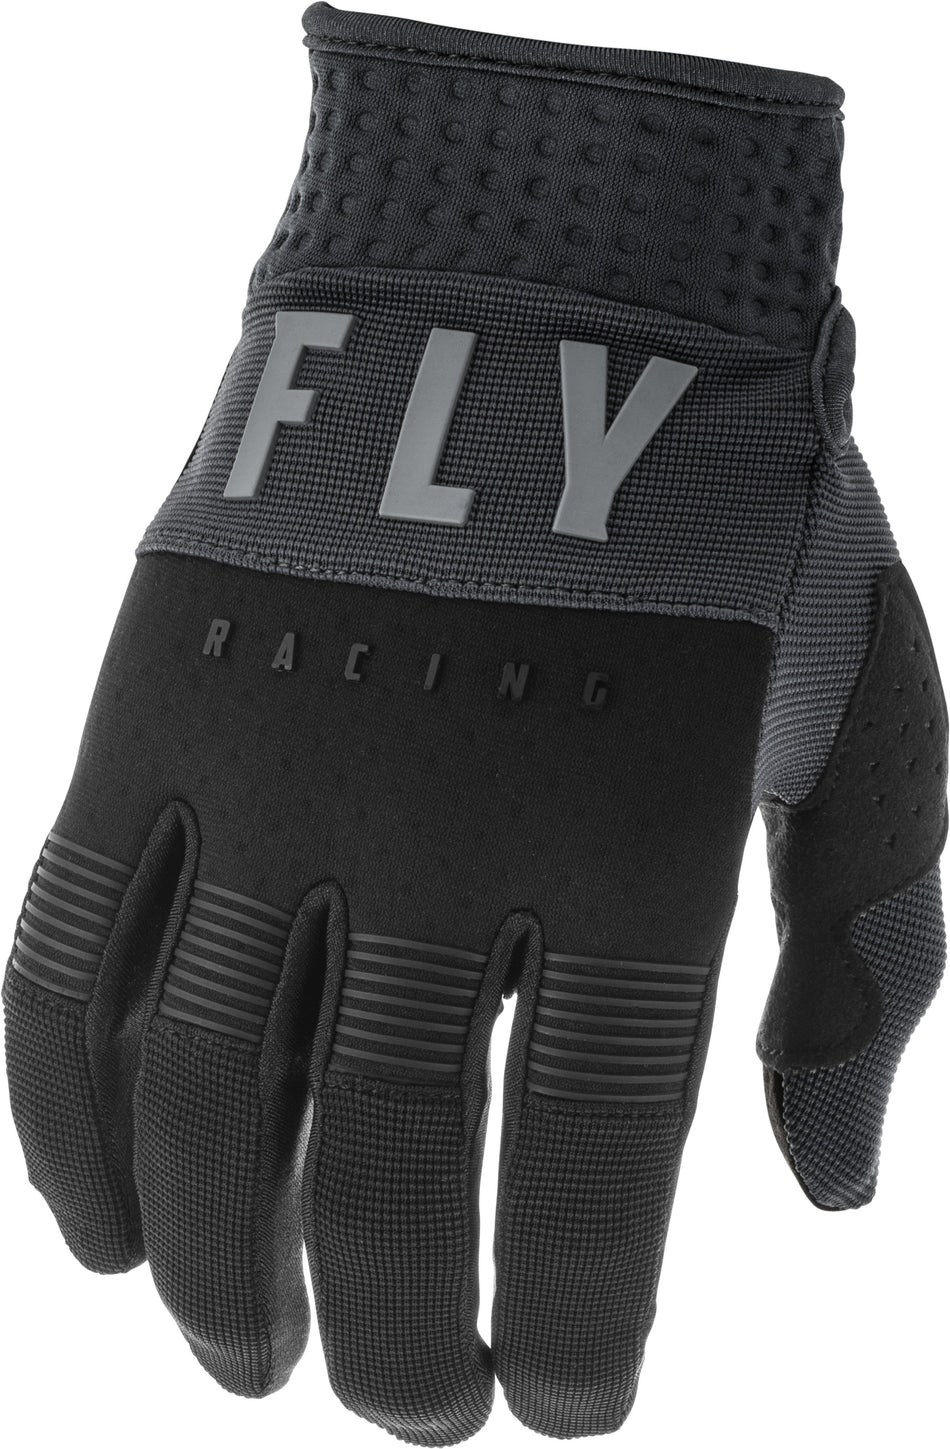 FLY RACING F-16 Gloves Black/Grey Sz 10 373-91010